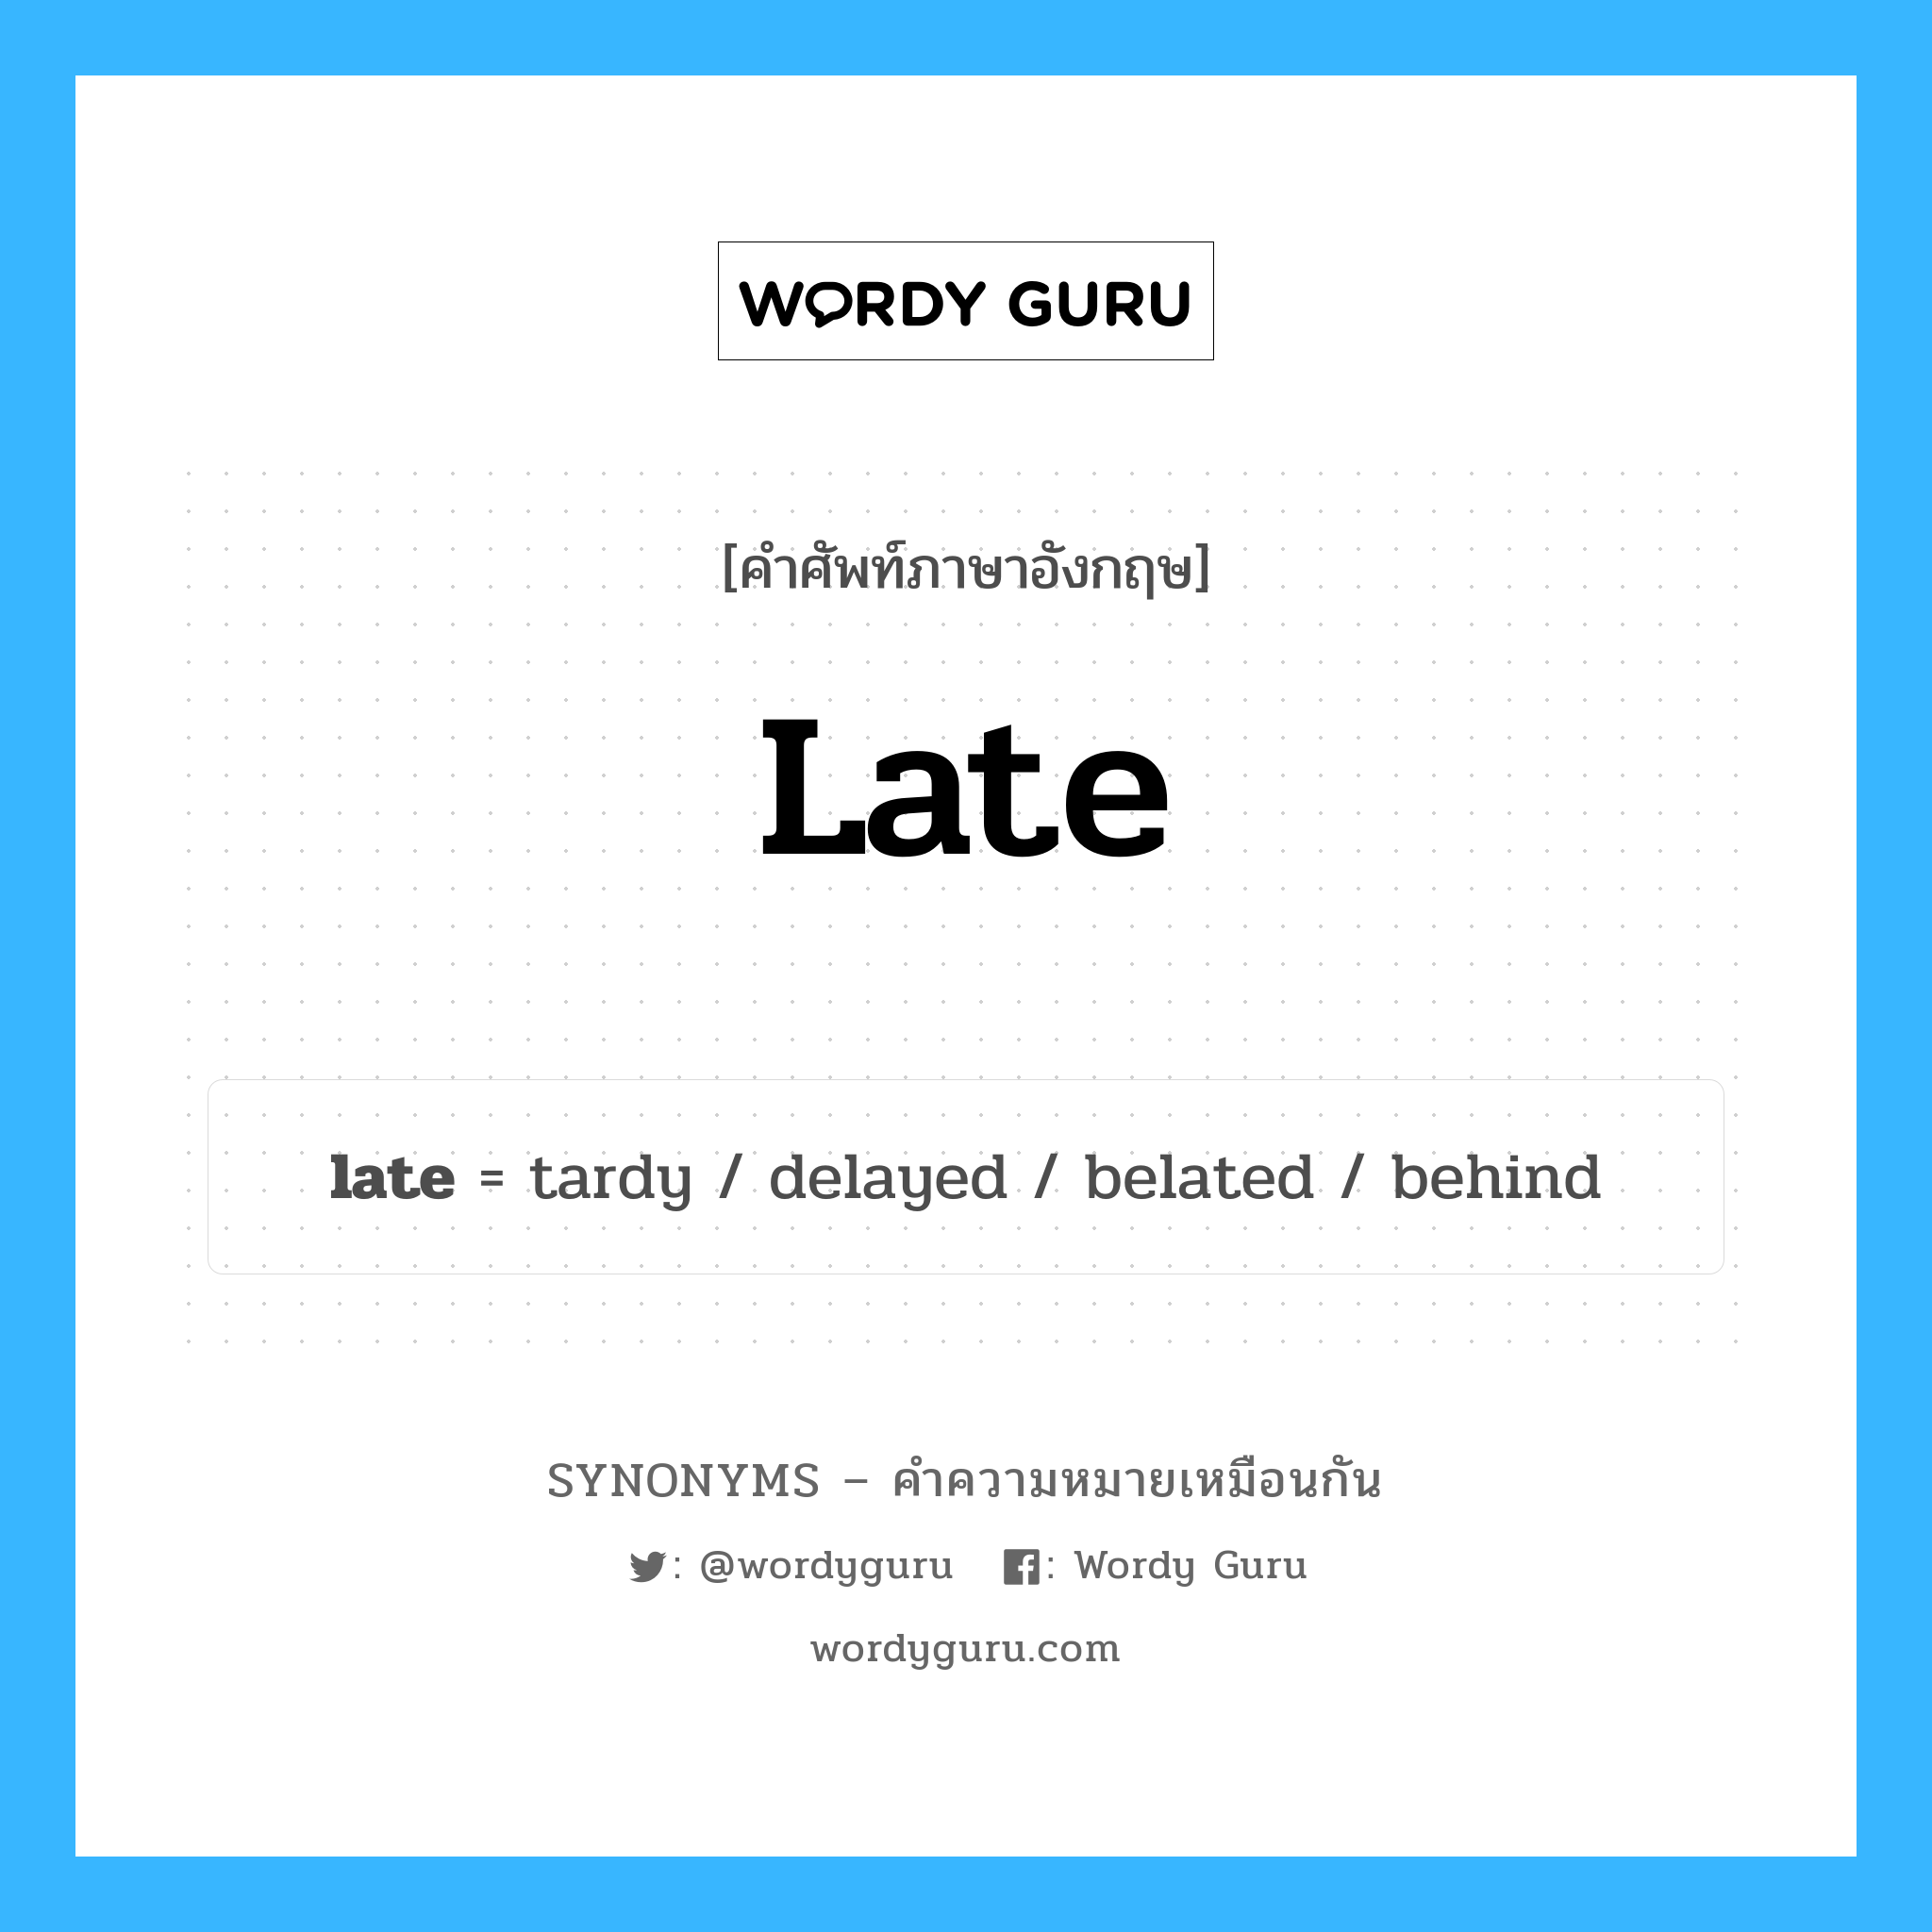 delayed เป็นหนึ่งใน late และมีคำอื่น ๆ อีกดังนี้, คำศัพท์ภาษาอังกฤษ delayed ความหมายคล้ายกันกับ late แปลว่า ล่าช้า หมวด late